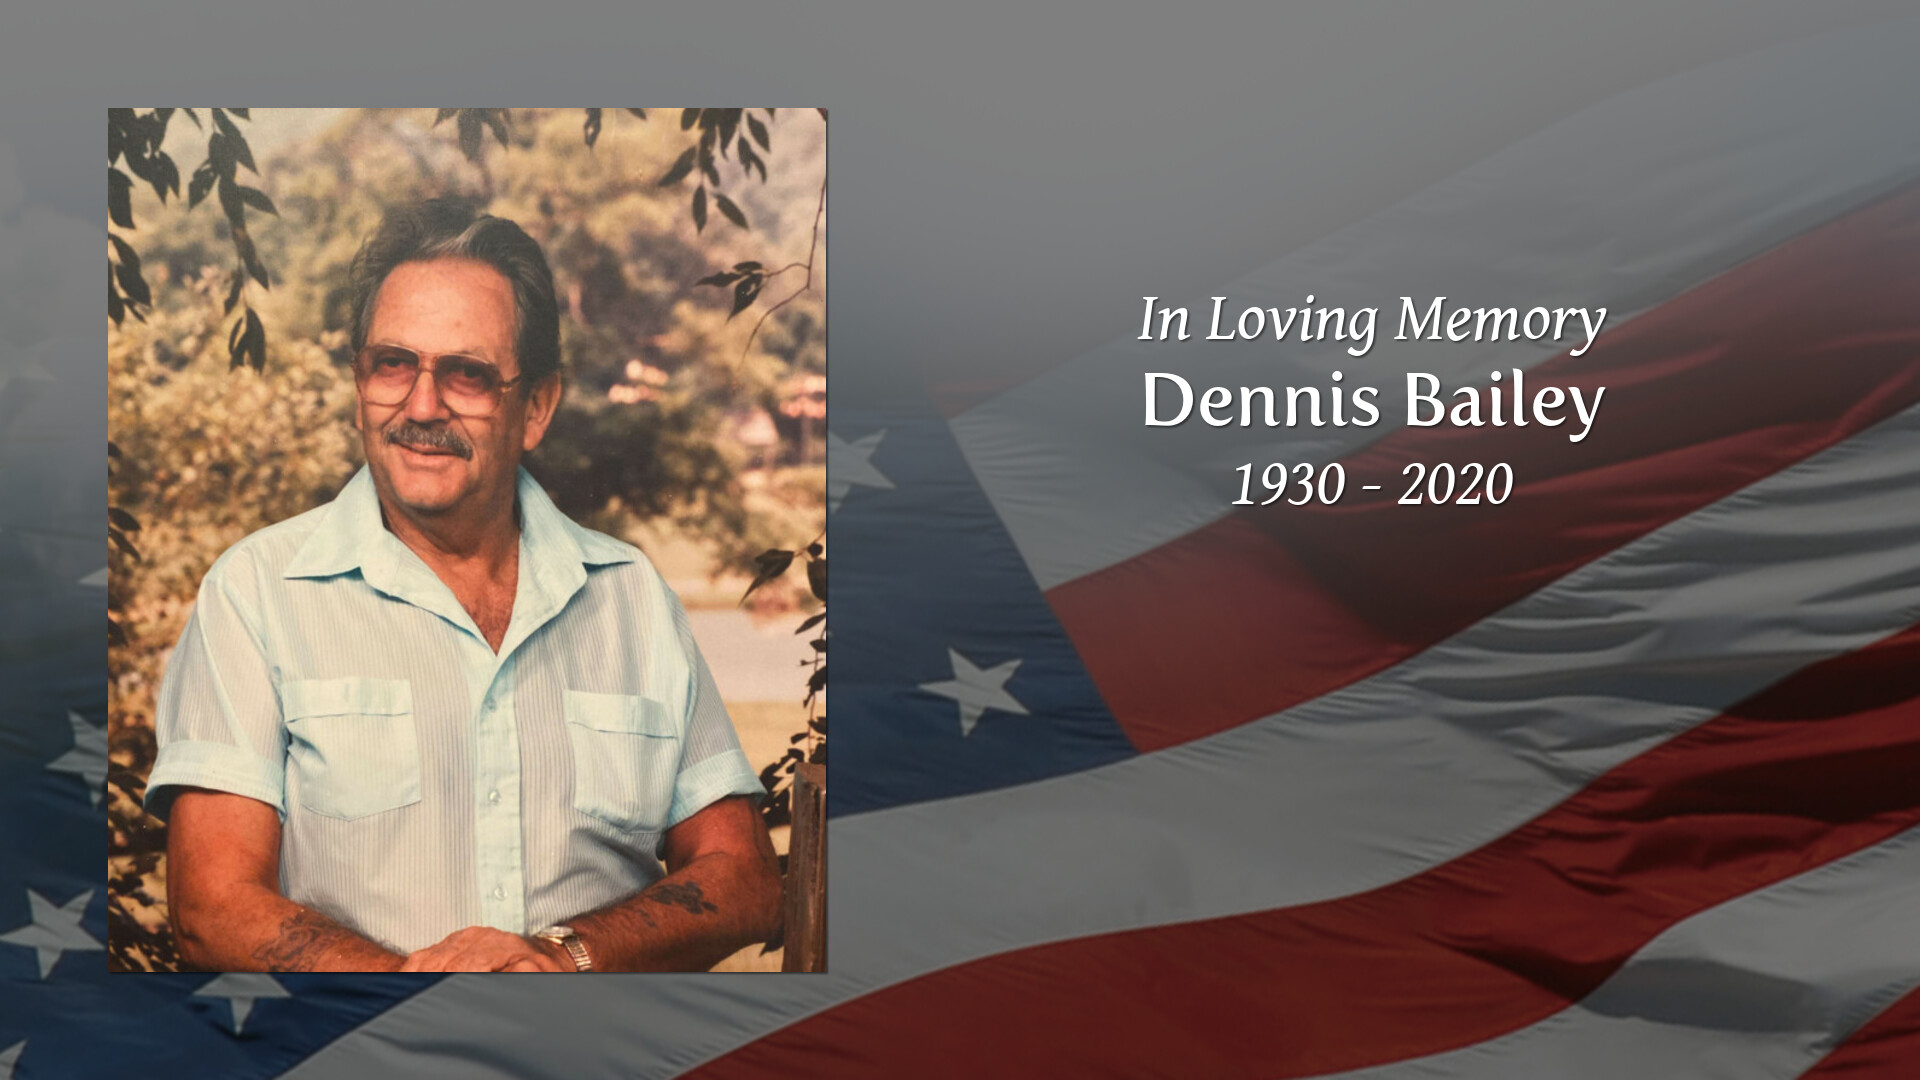 Dennis Bailey Tribute Video